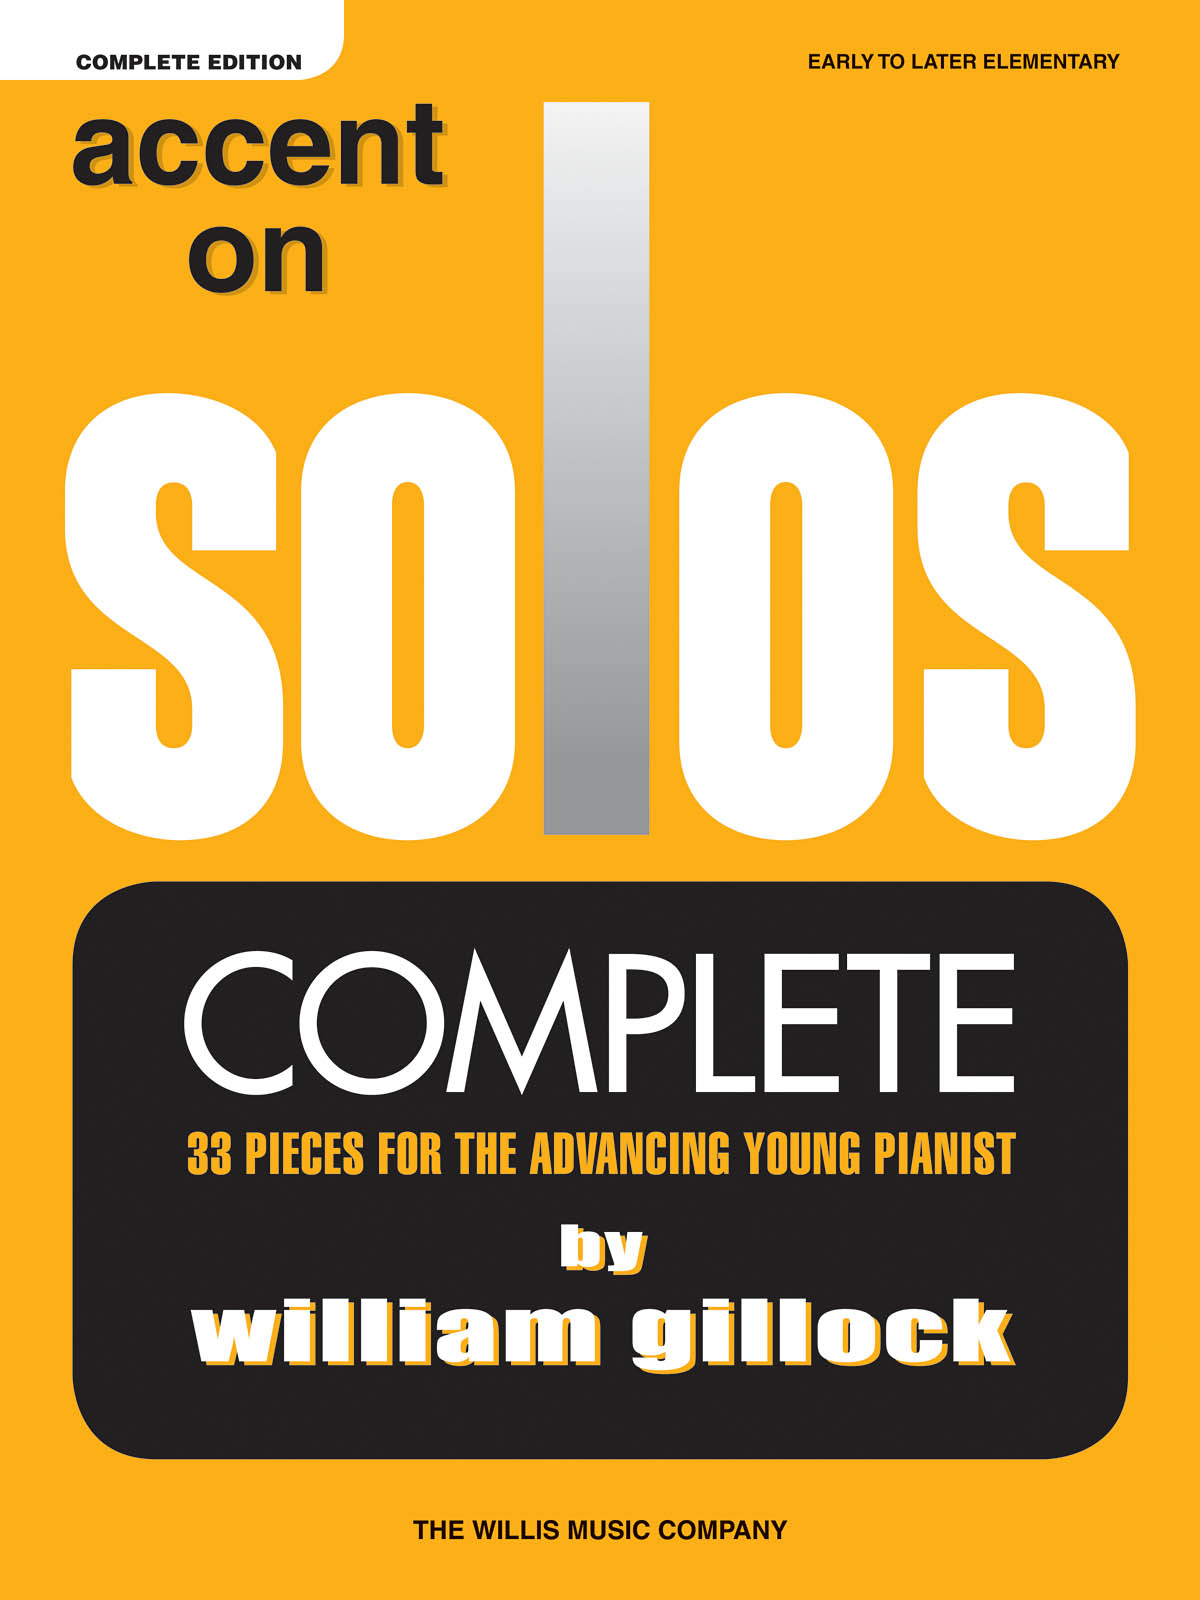 Accent On Solos - Complete Edition - Early to Later Elementary Level - známé skladby na klavír